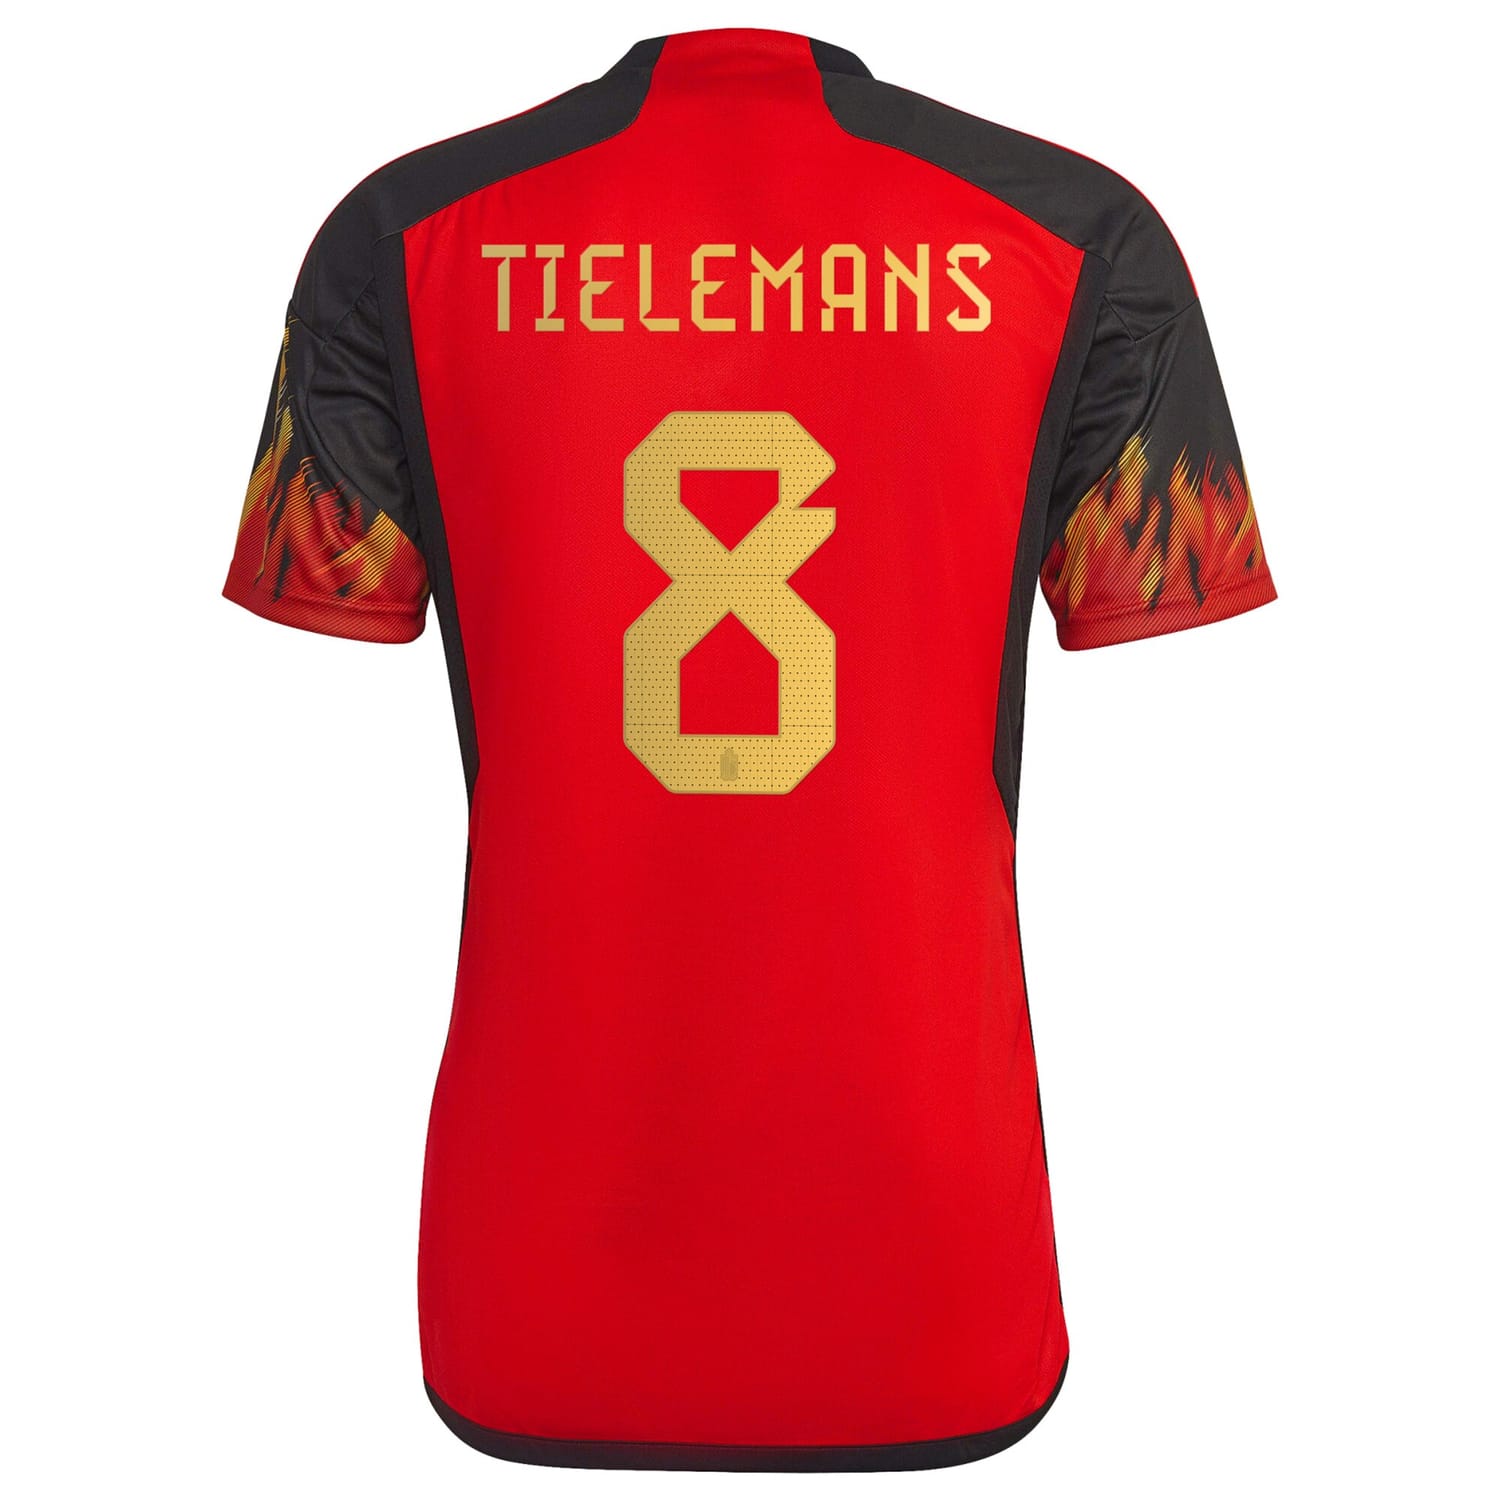 Belgium National Team Home Jersey Shirt 2022 player Youri Tielemans 8 printing for Men